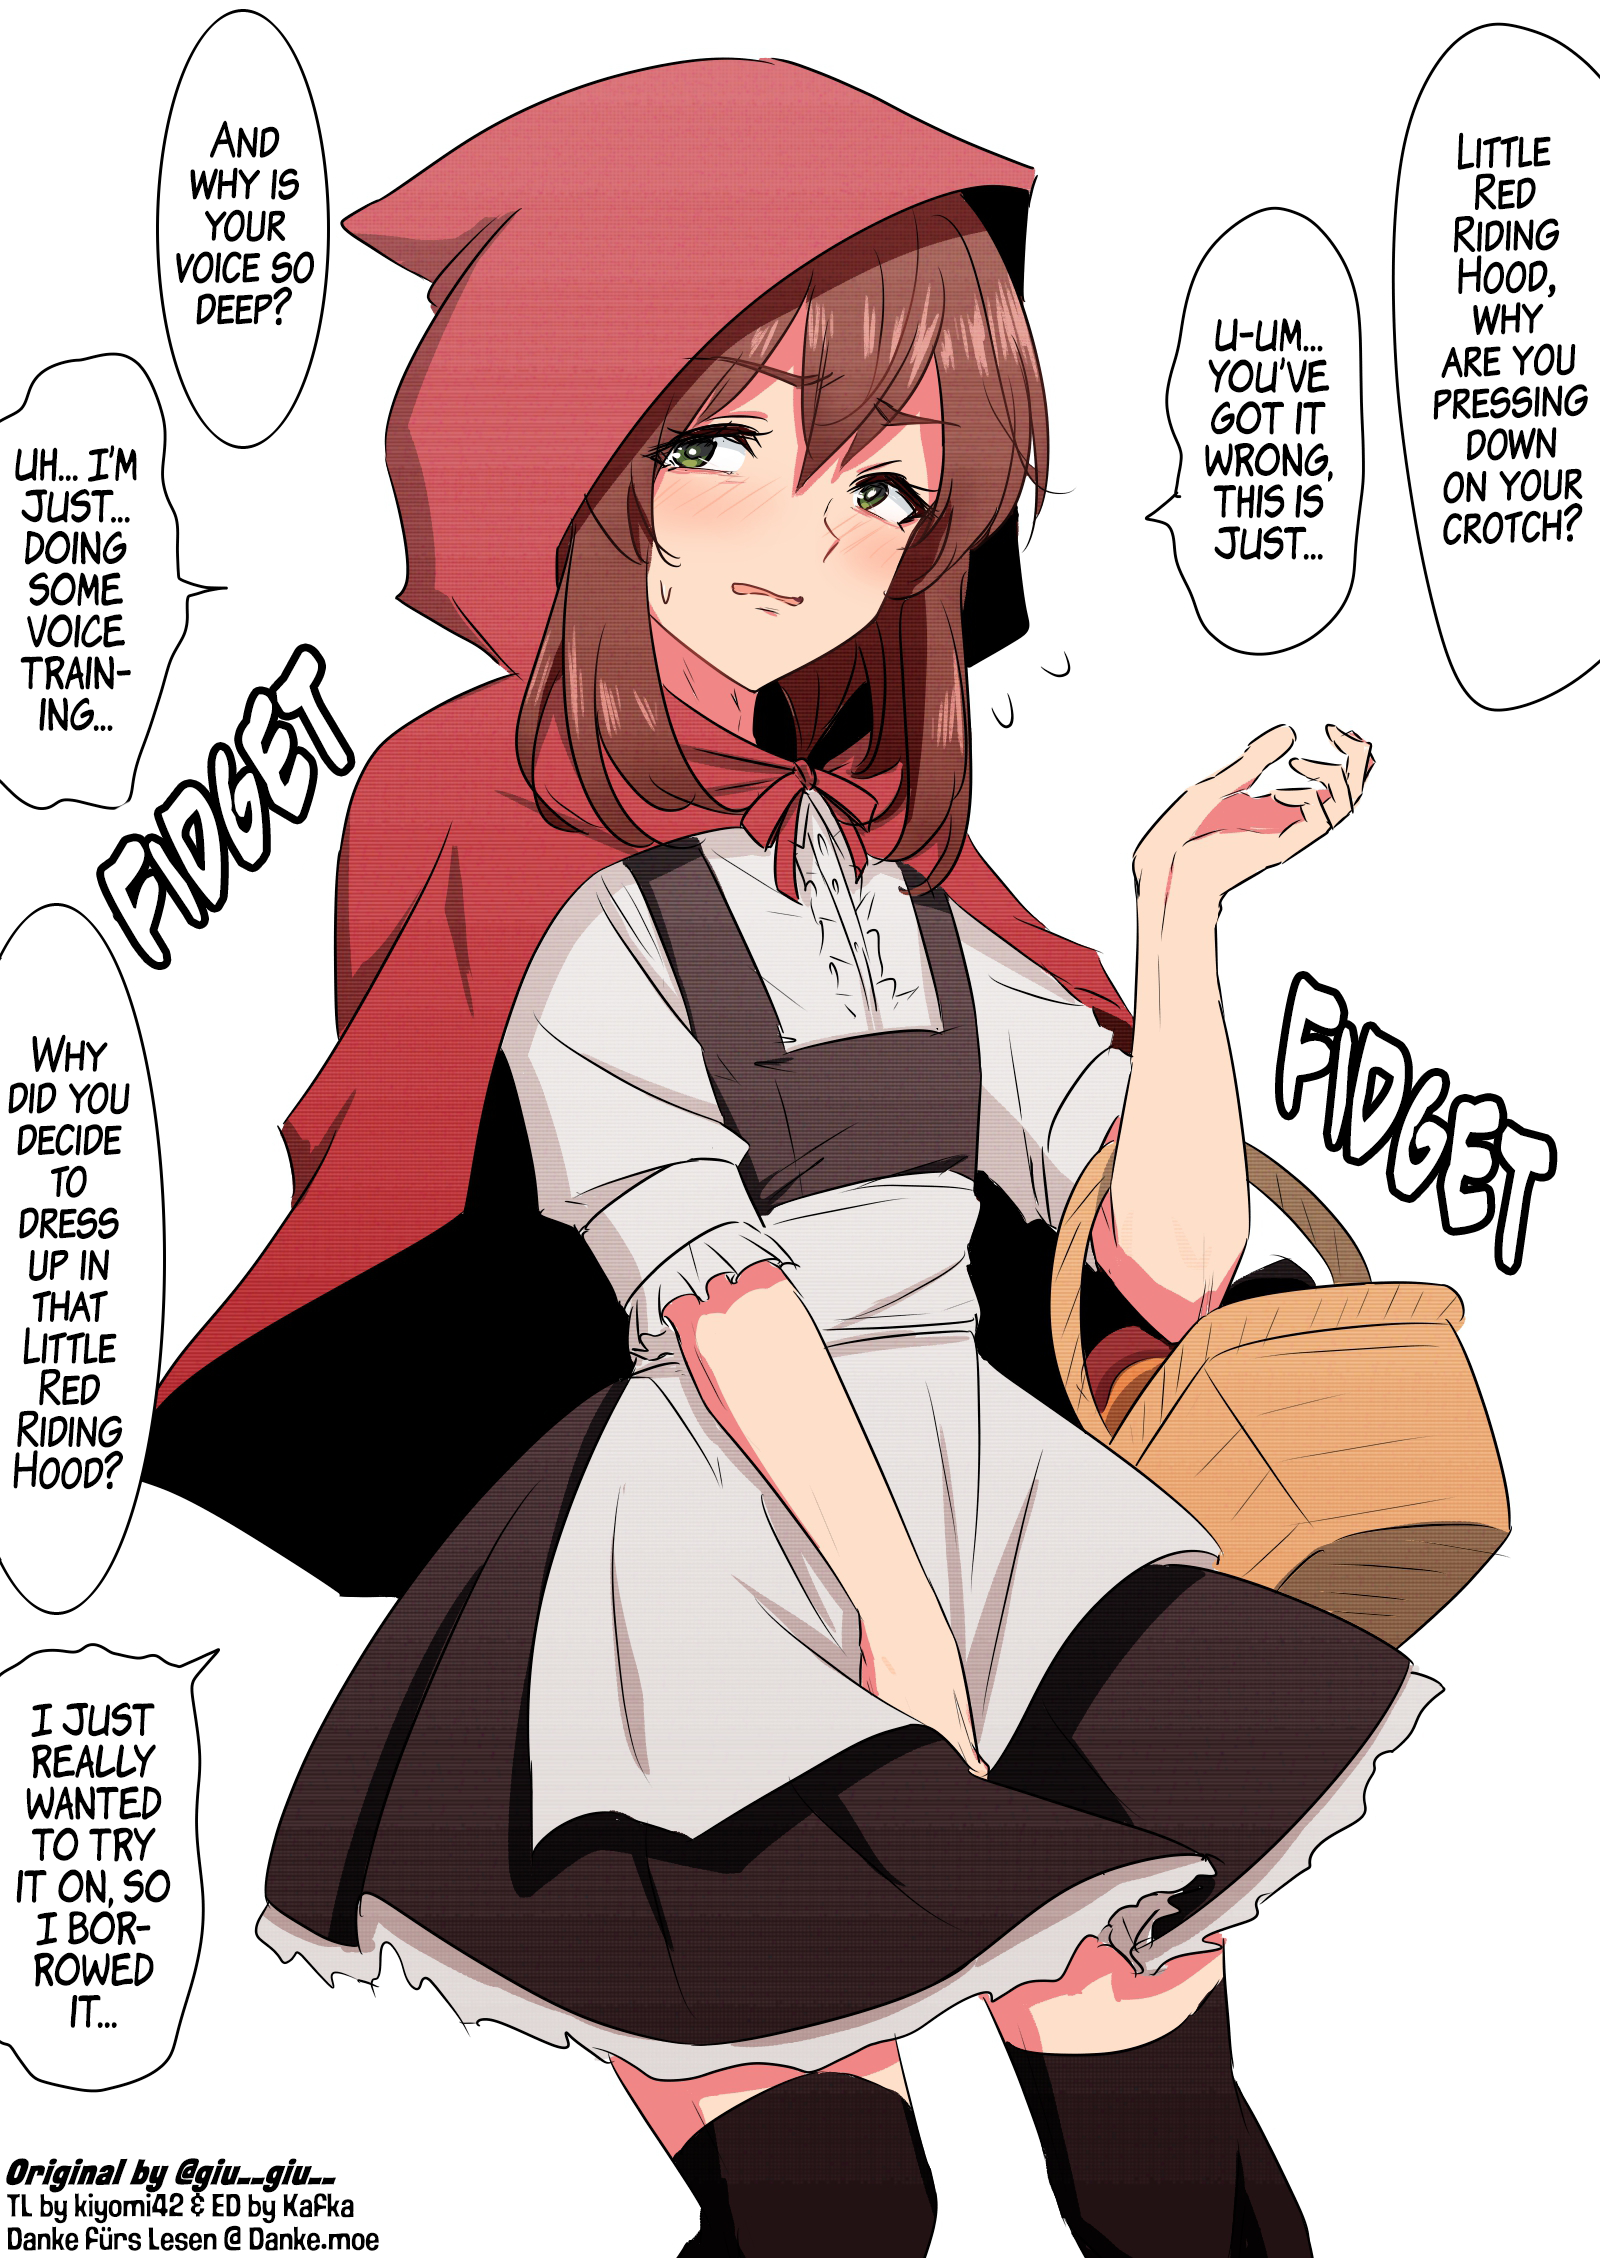 A Crossdressing Little Red Riding Hood manga